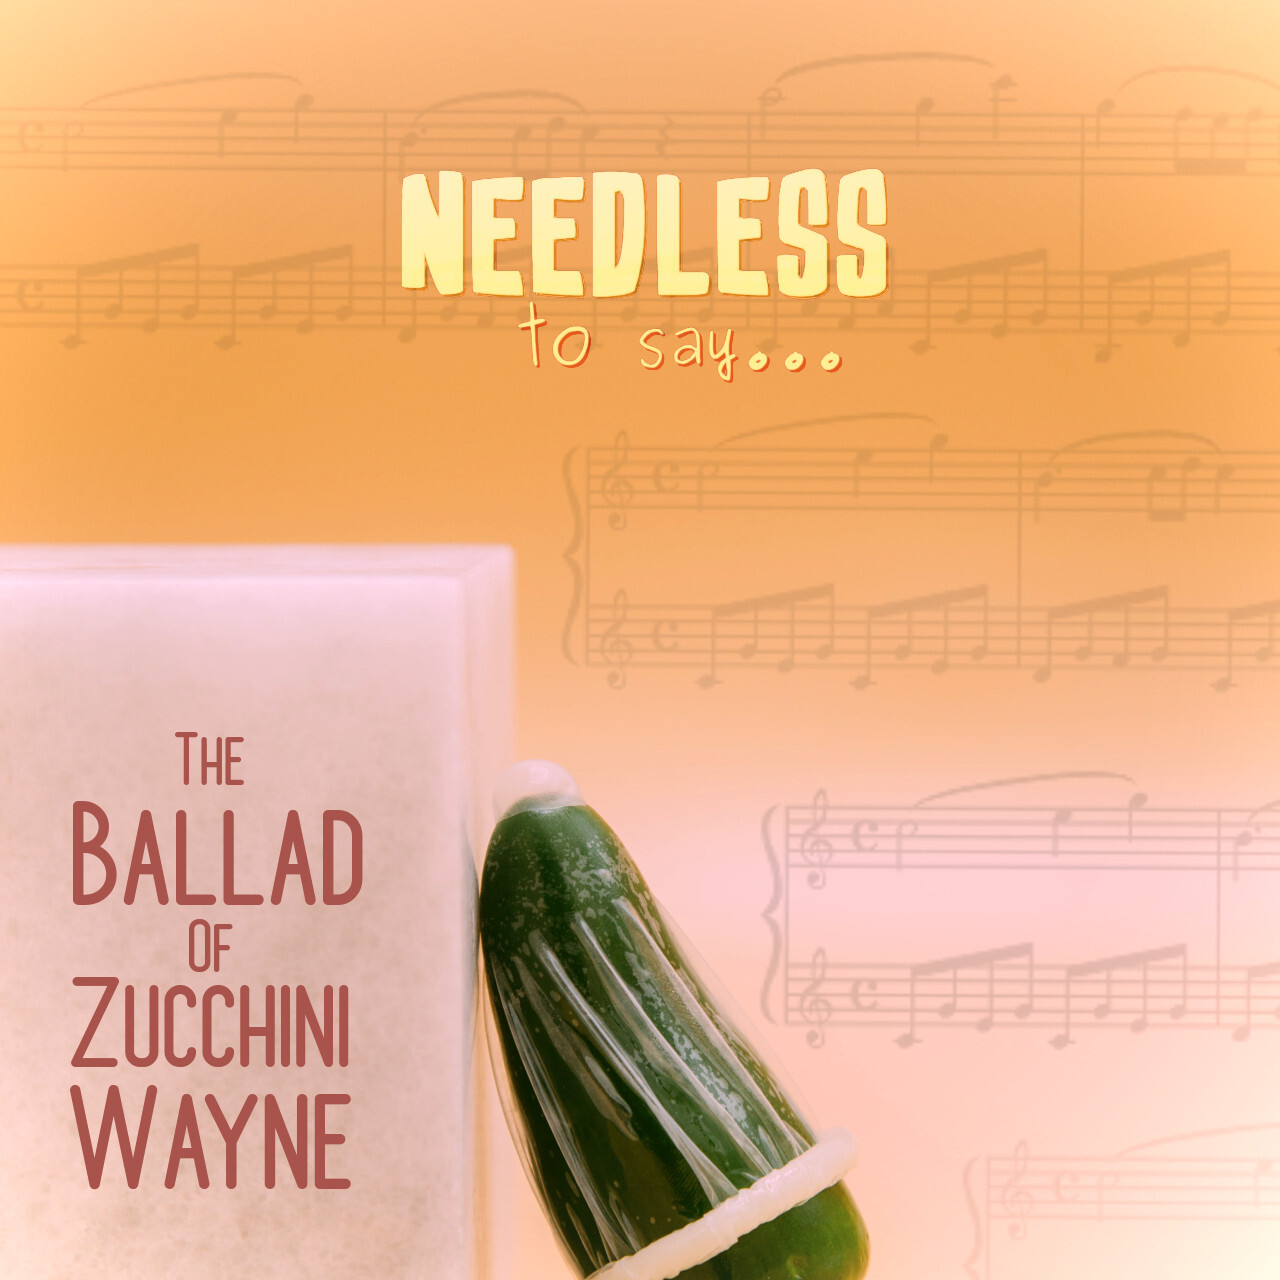 The Ballad of Zucchini Wayne